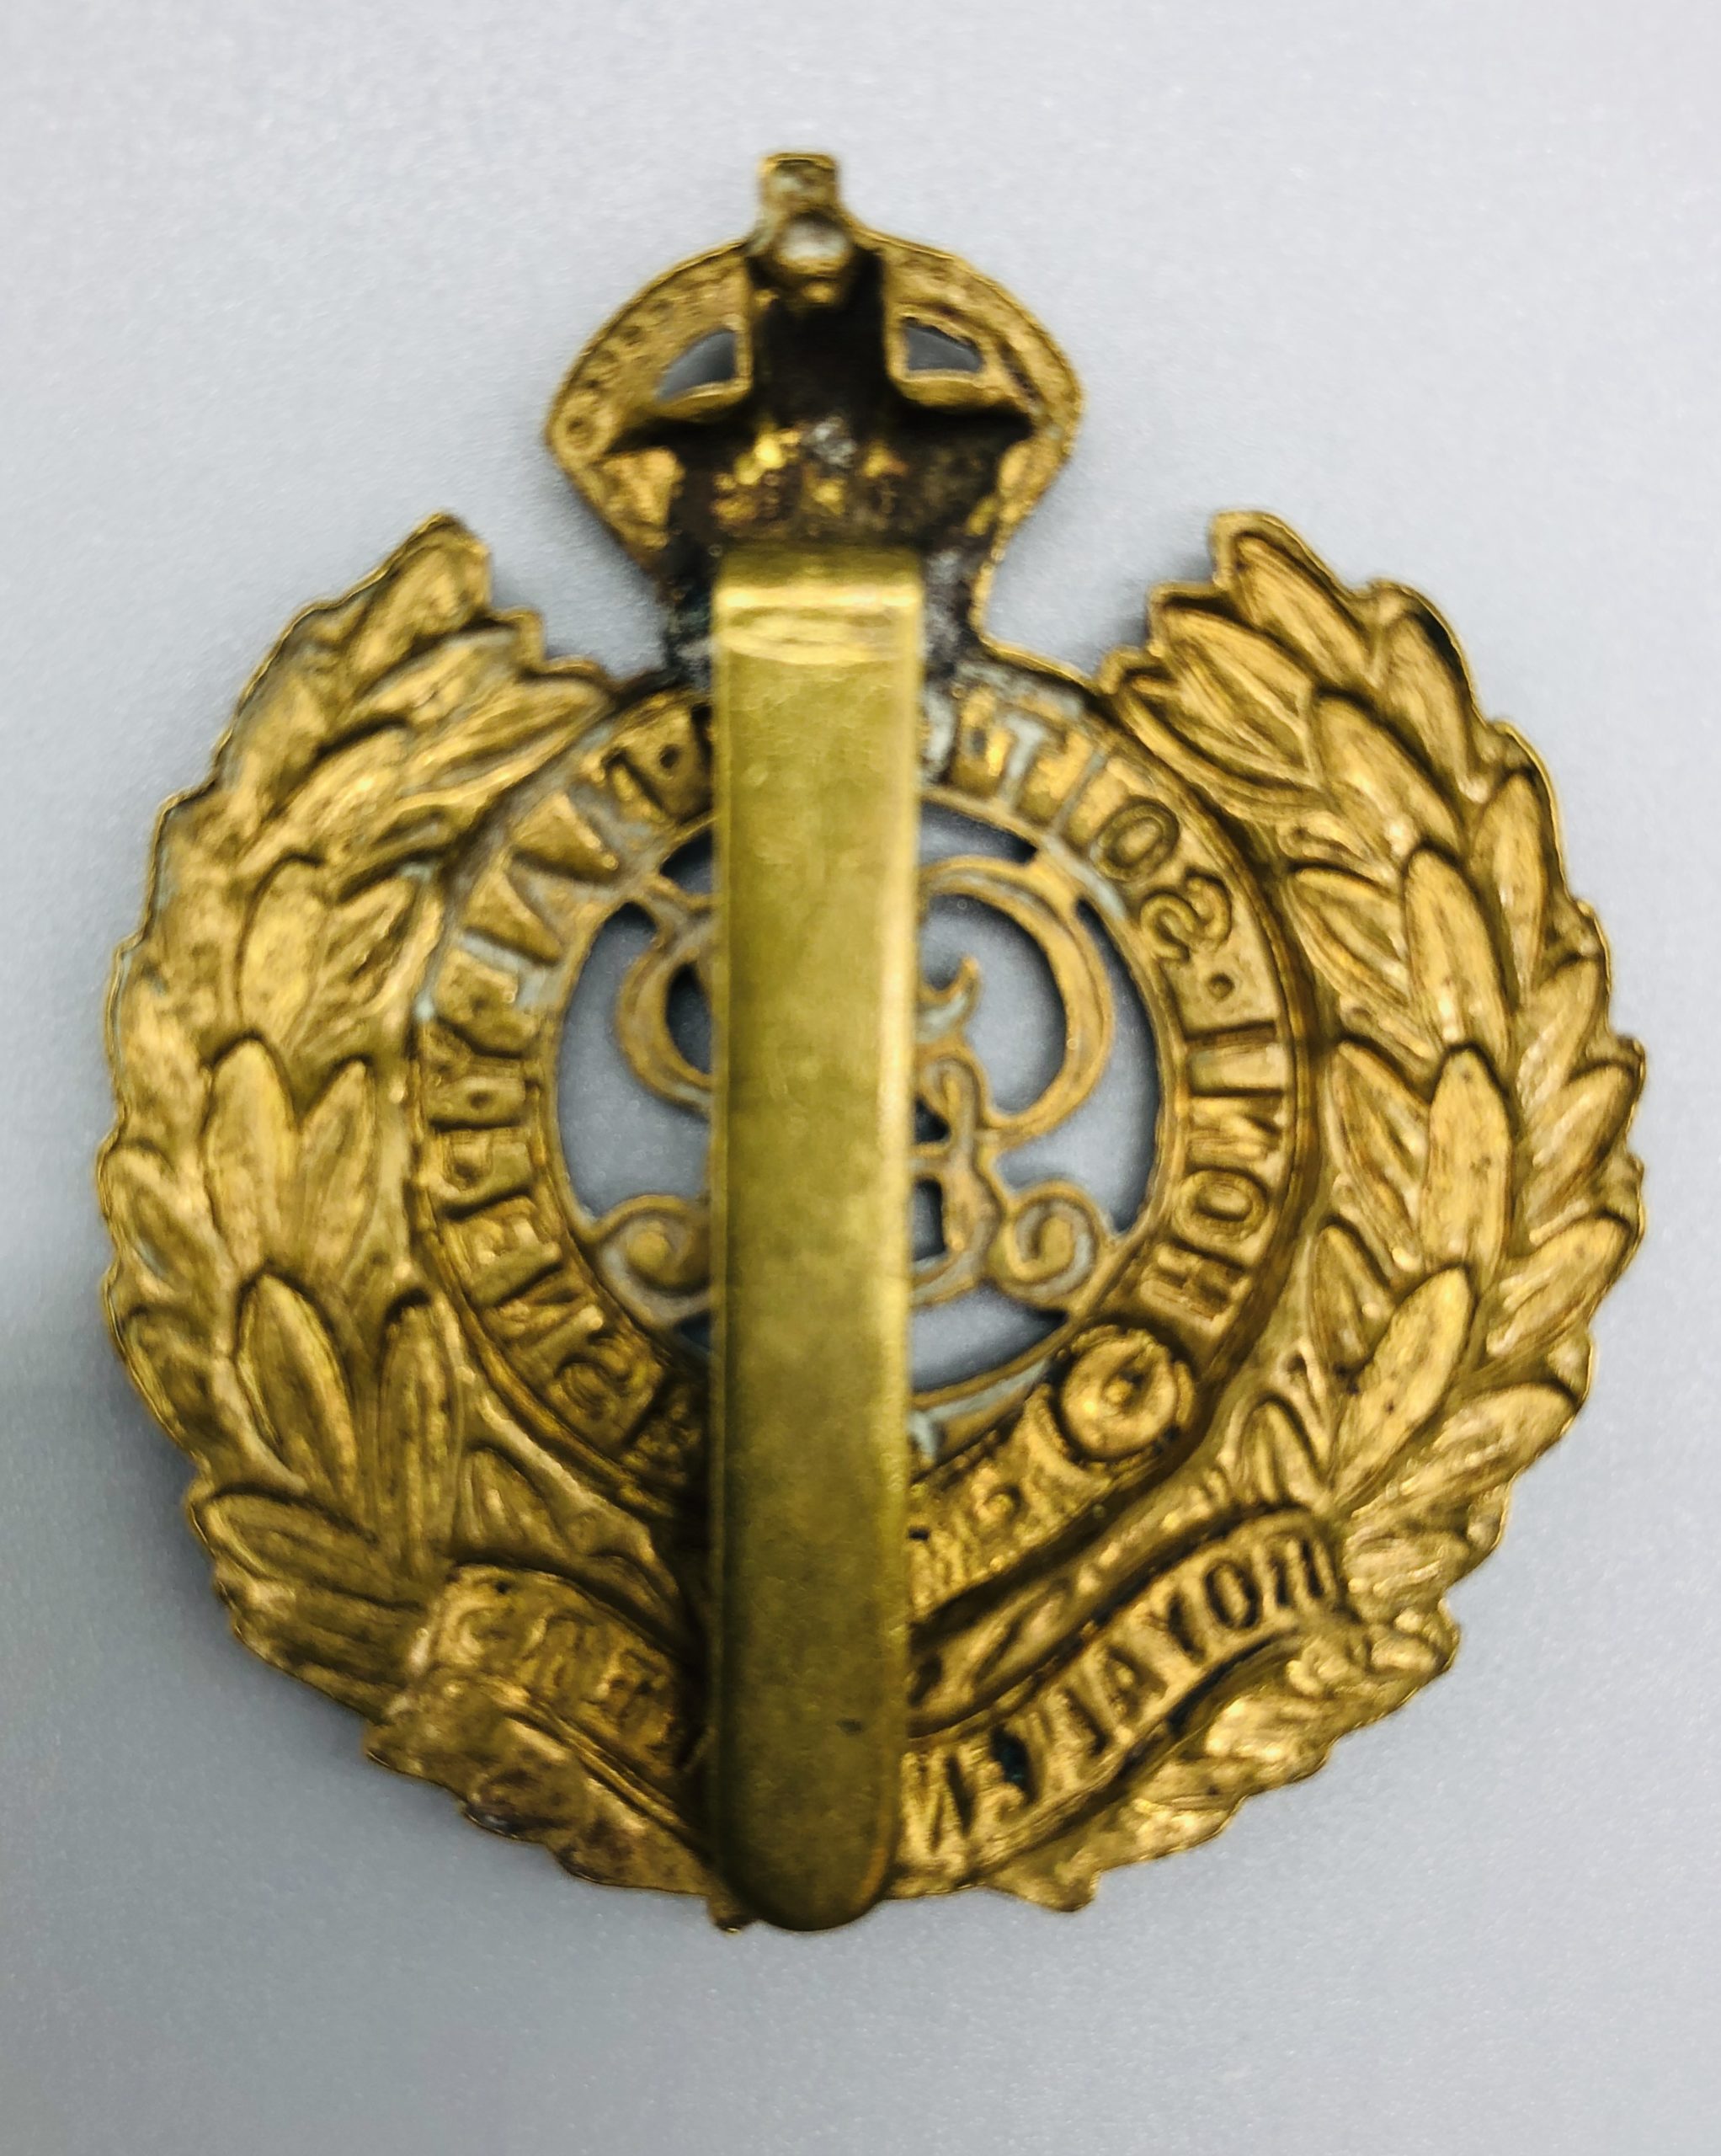 Sold Separately. WW1/WW2 Royal Engineers Cap Badges 